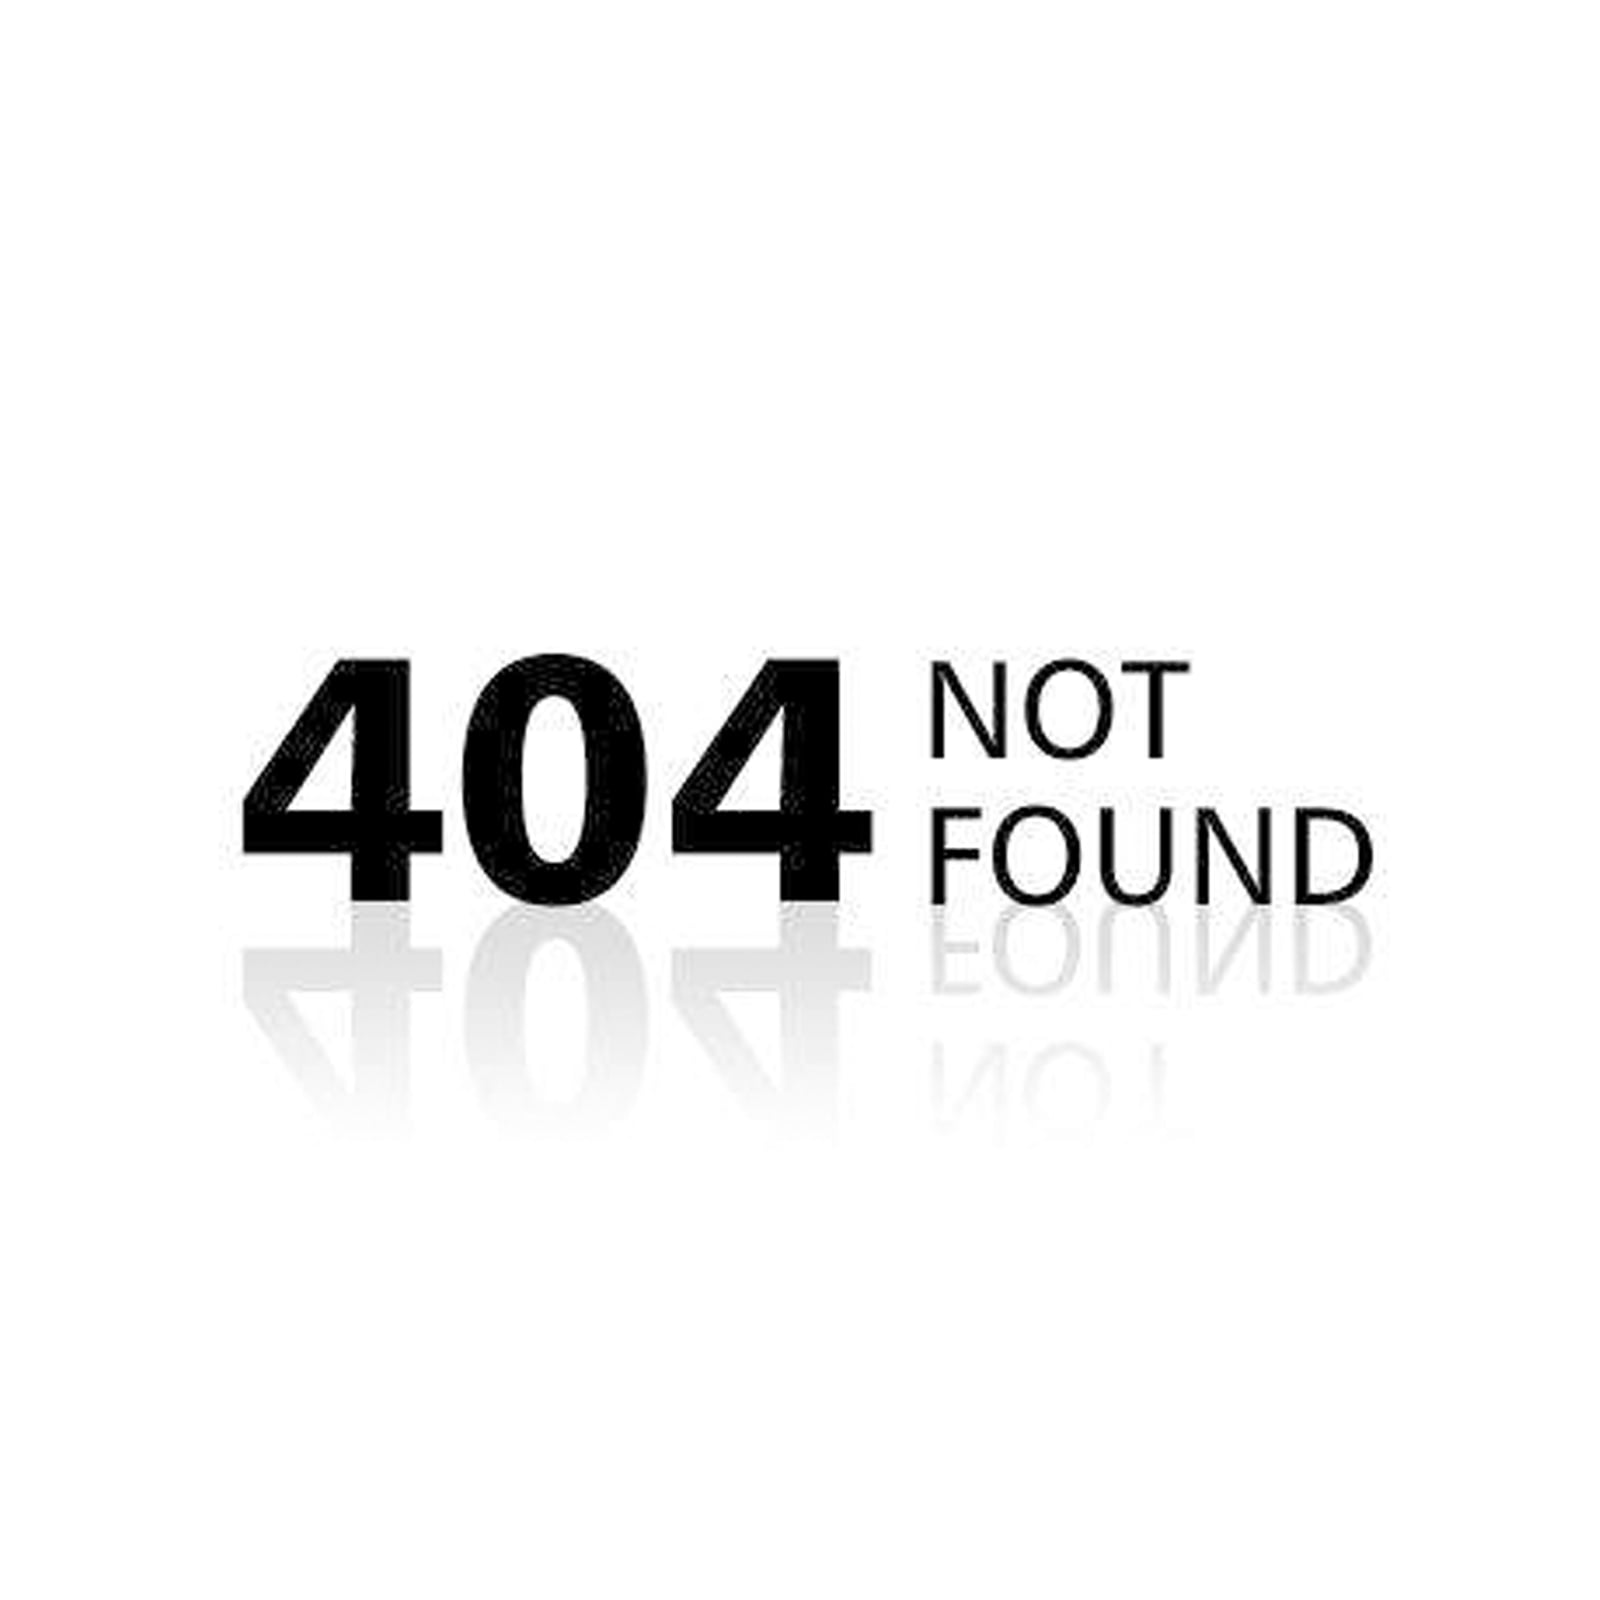 Curl not found. 404 Not found. Логотип 404. 404 Not found картинка. Not found без фона.